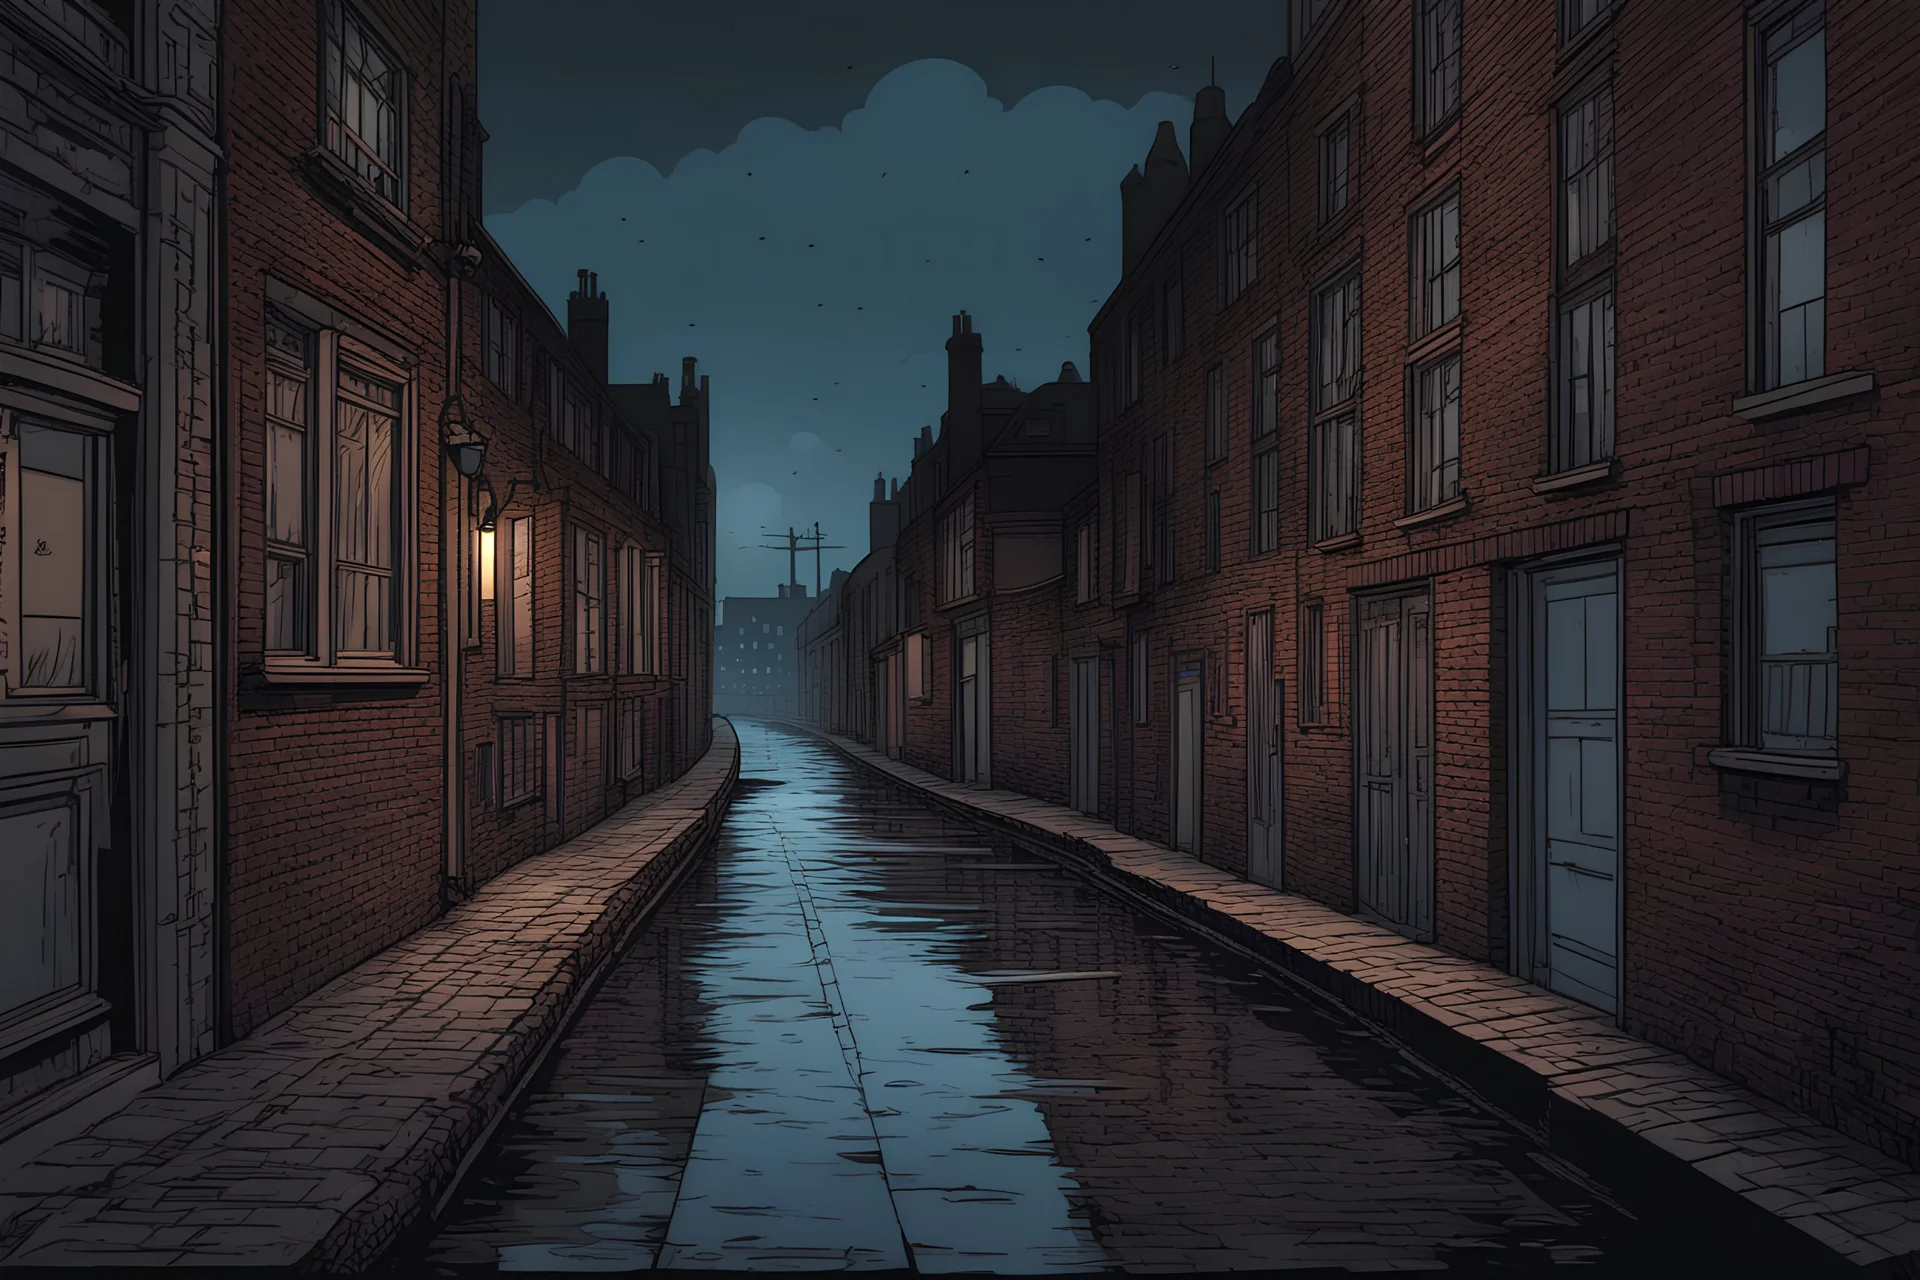 2d flat, comic book, whitechapel street, night, victorian, city london moody, dark, sad, brick, gutter, canal